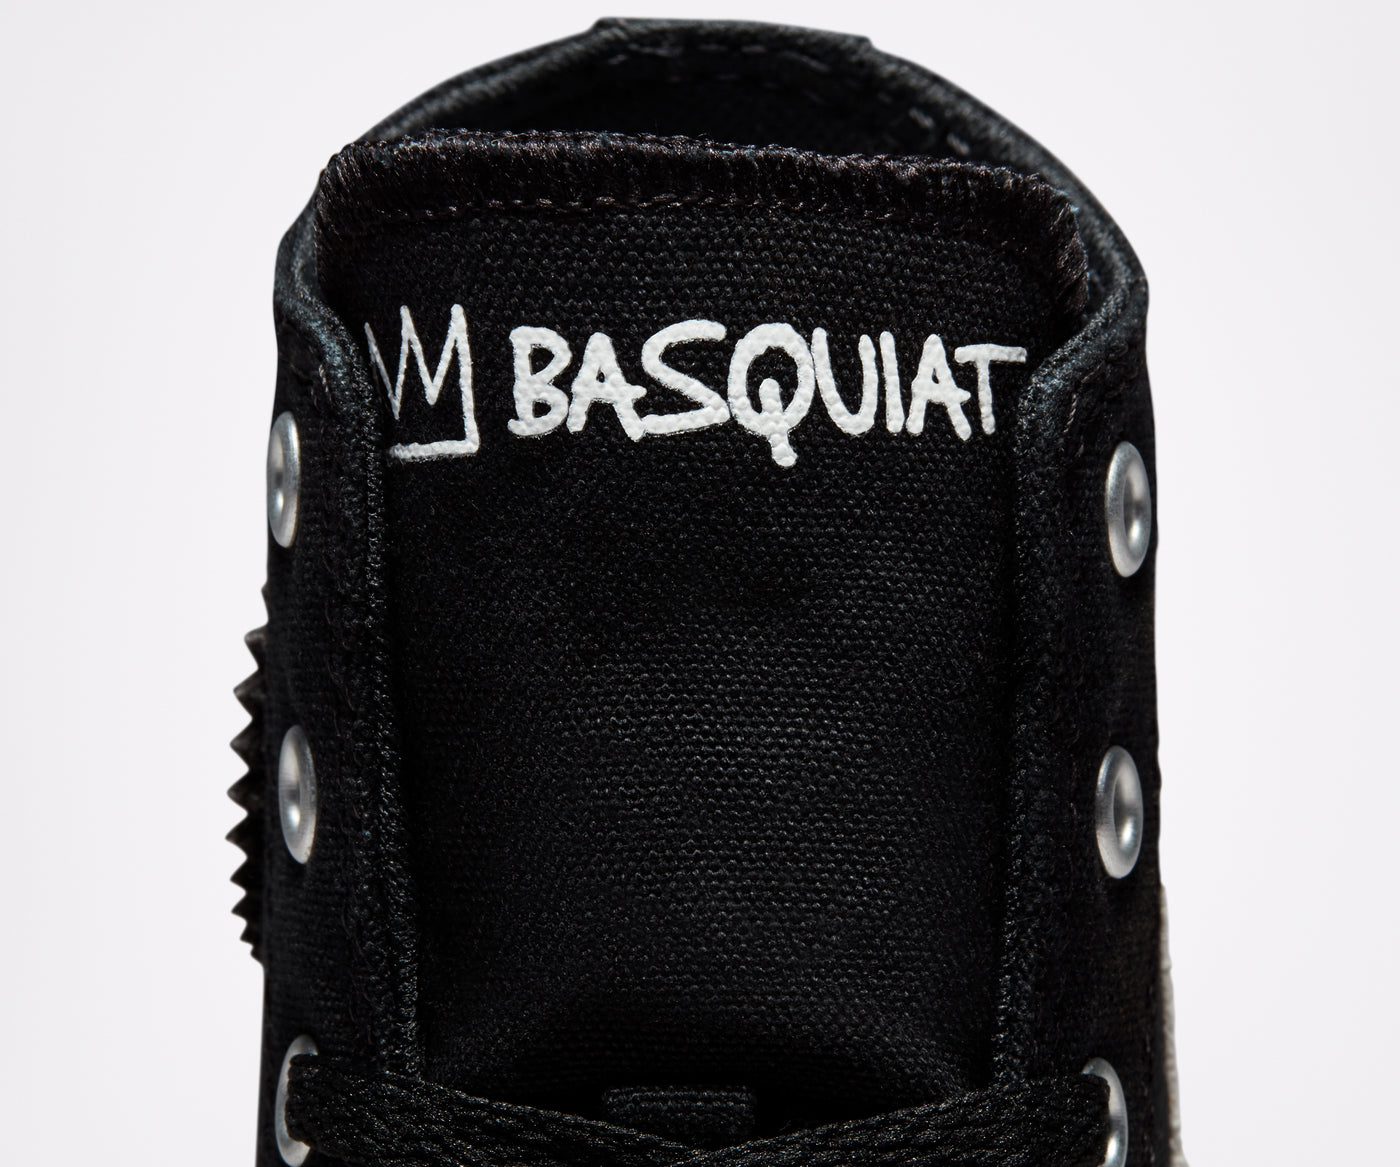 Jean-Michel Basquiat x Converse All-Star High Top Preschool Pez Dispenser Dinosaur